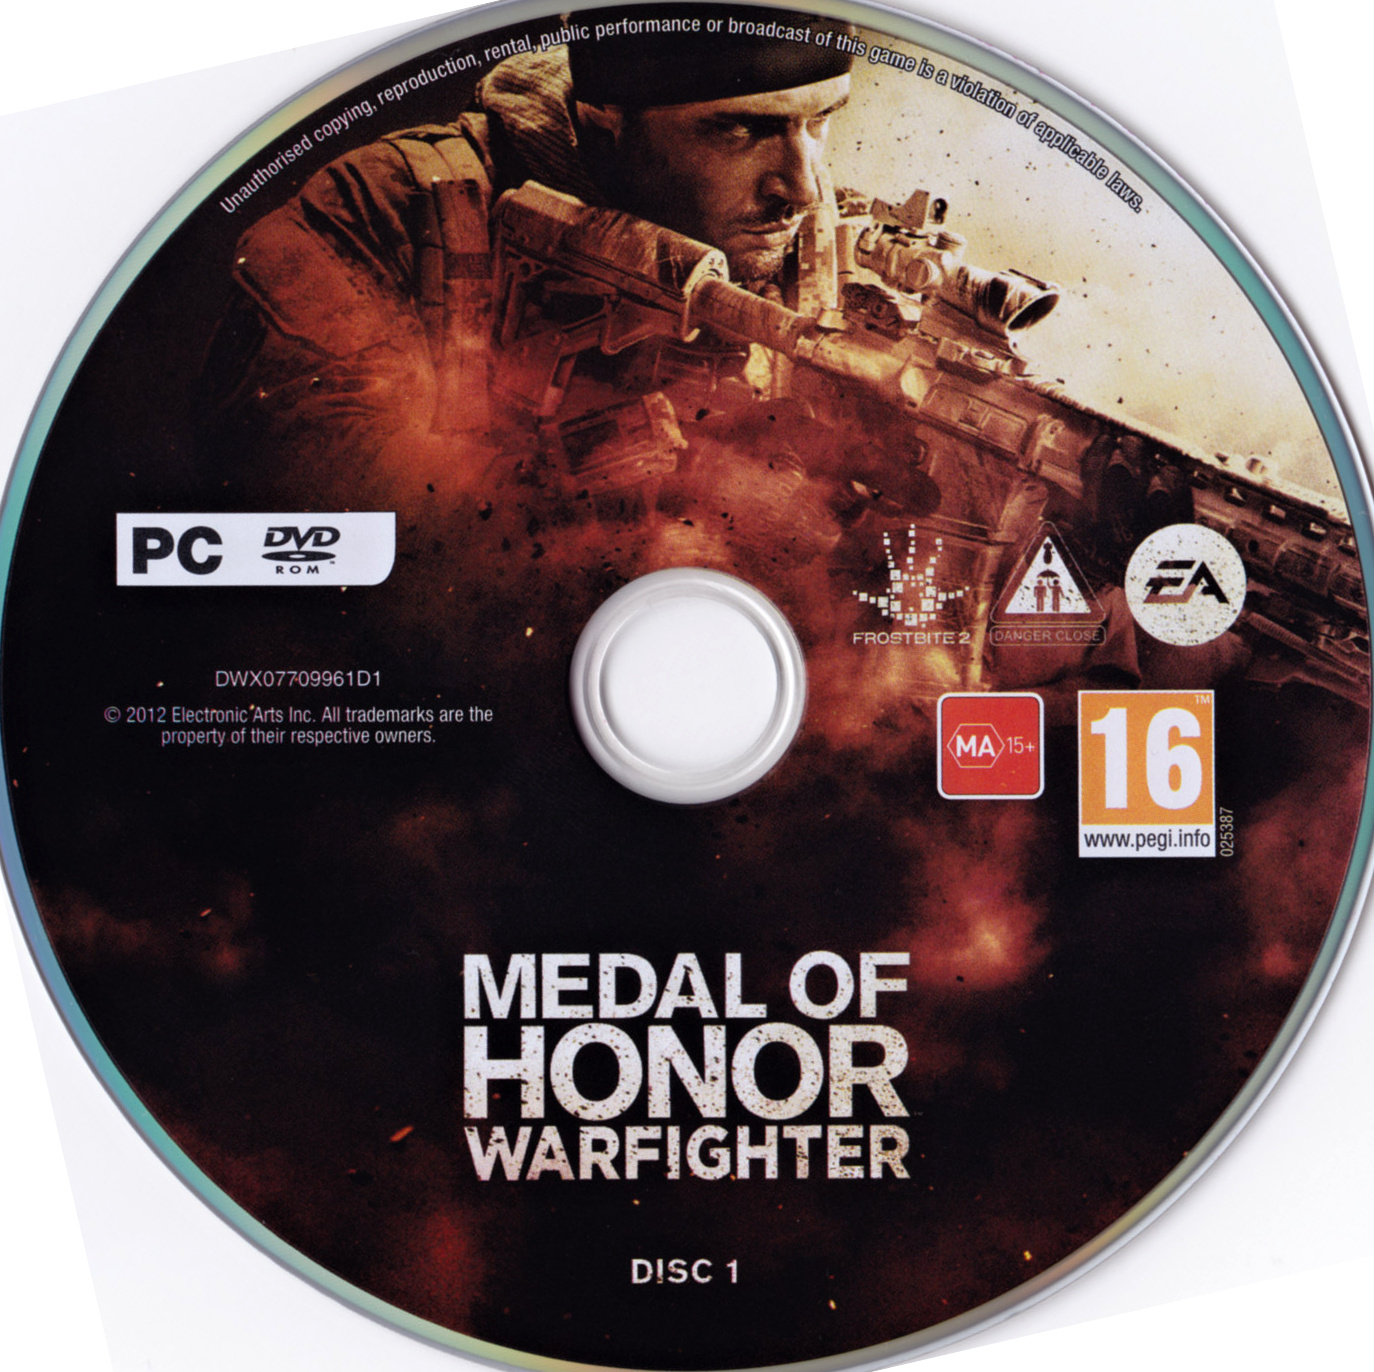 Medal of Honor Limited Edition. Medal of Honor Limited Edition PC game Cover. Medal of Honor Warfighter диск с игрой на ПК. Medal of Honor Warfighter ps3 диск. Medal of honor трейнер